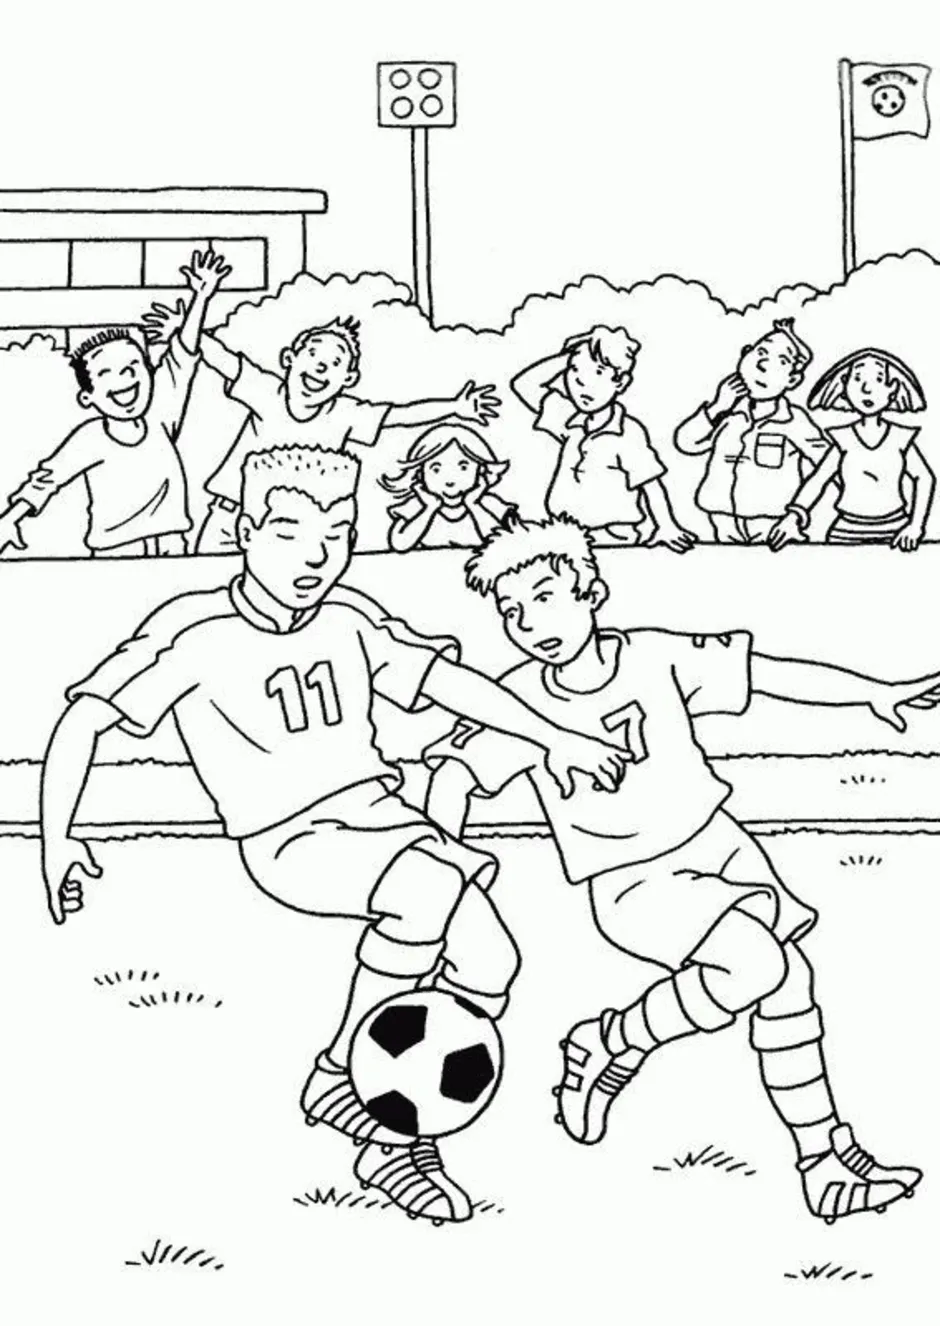 Рисунок на тему футбол в школе карандашом